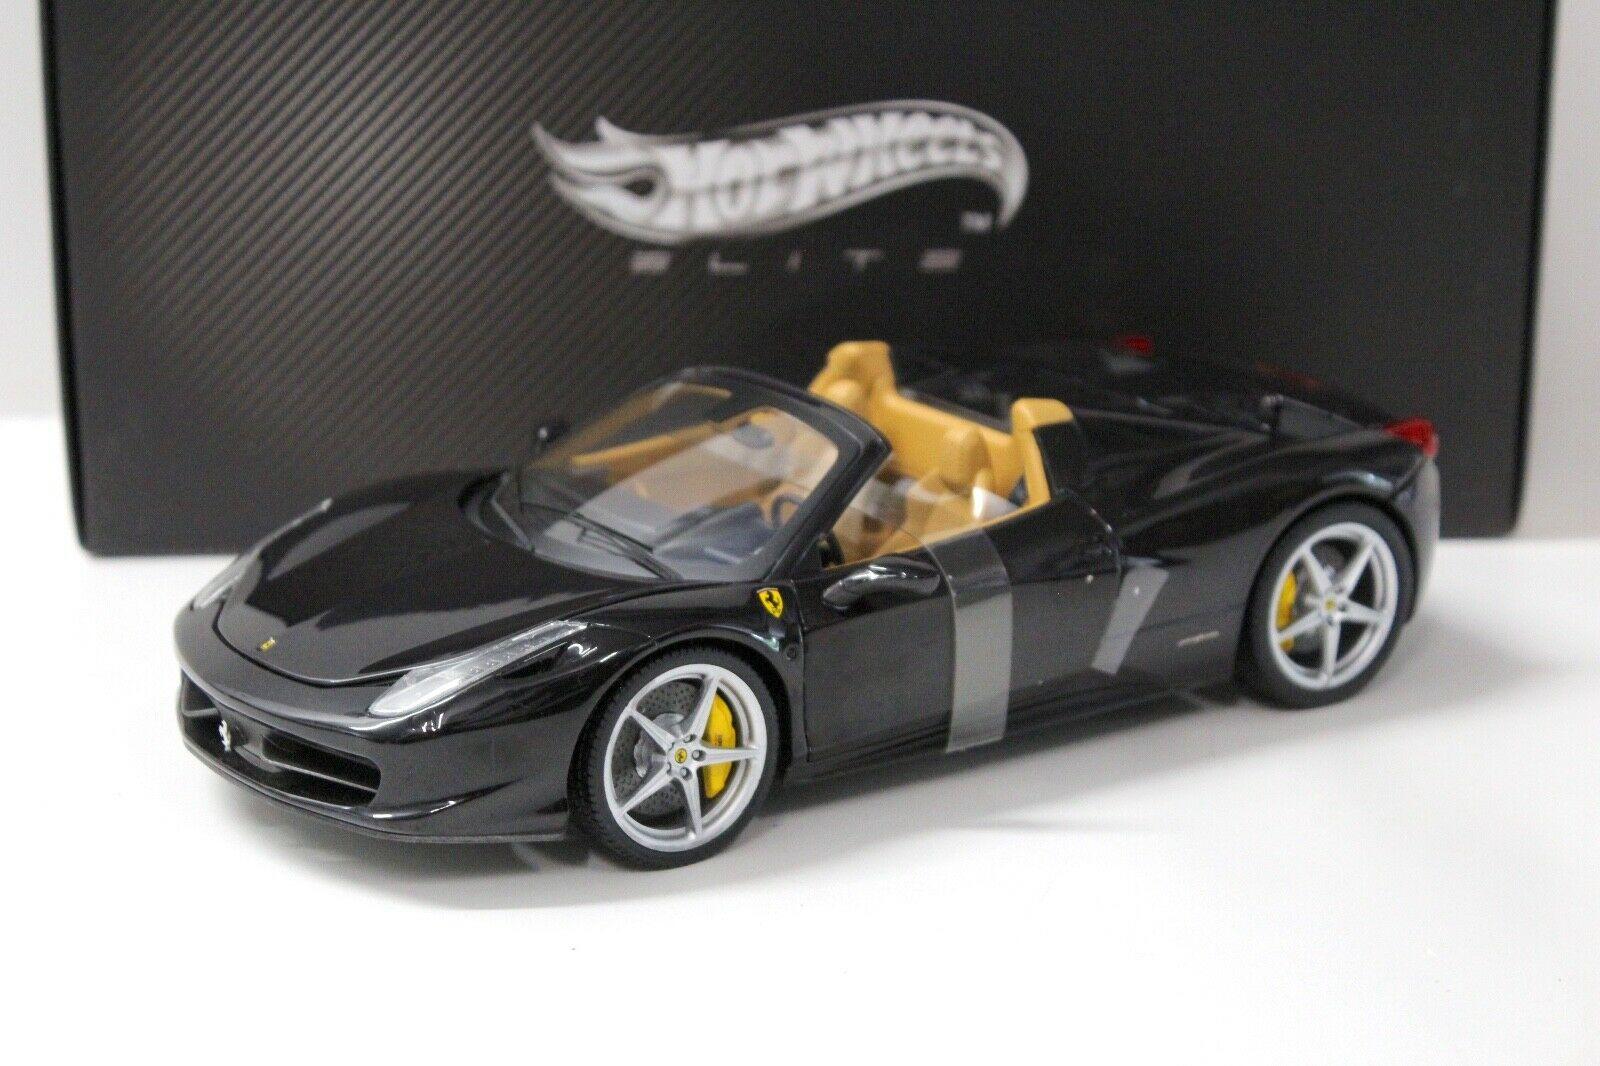 1:18 Hot Wheels Elite Ferrari 458 Spider black